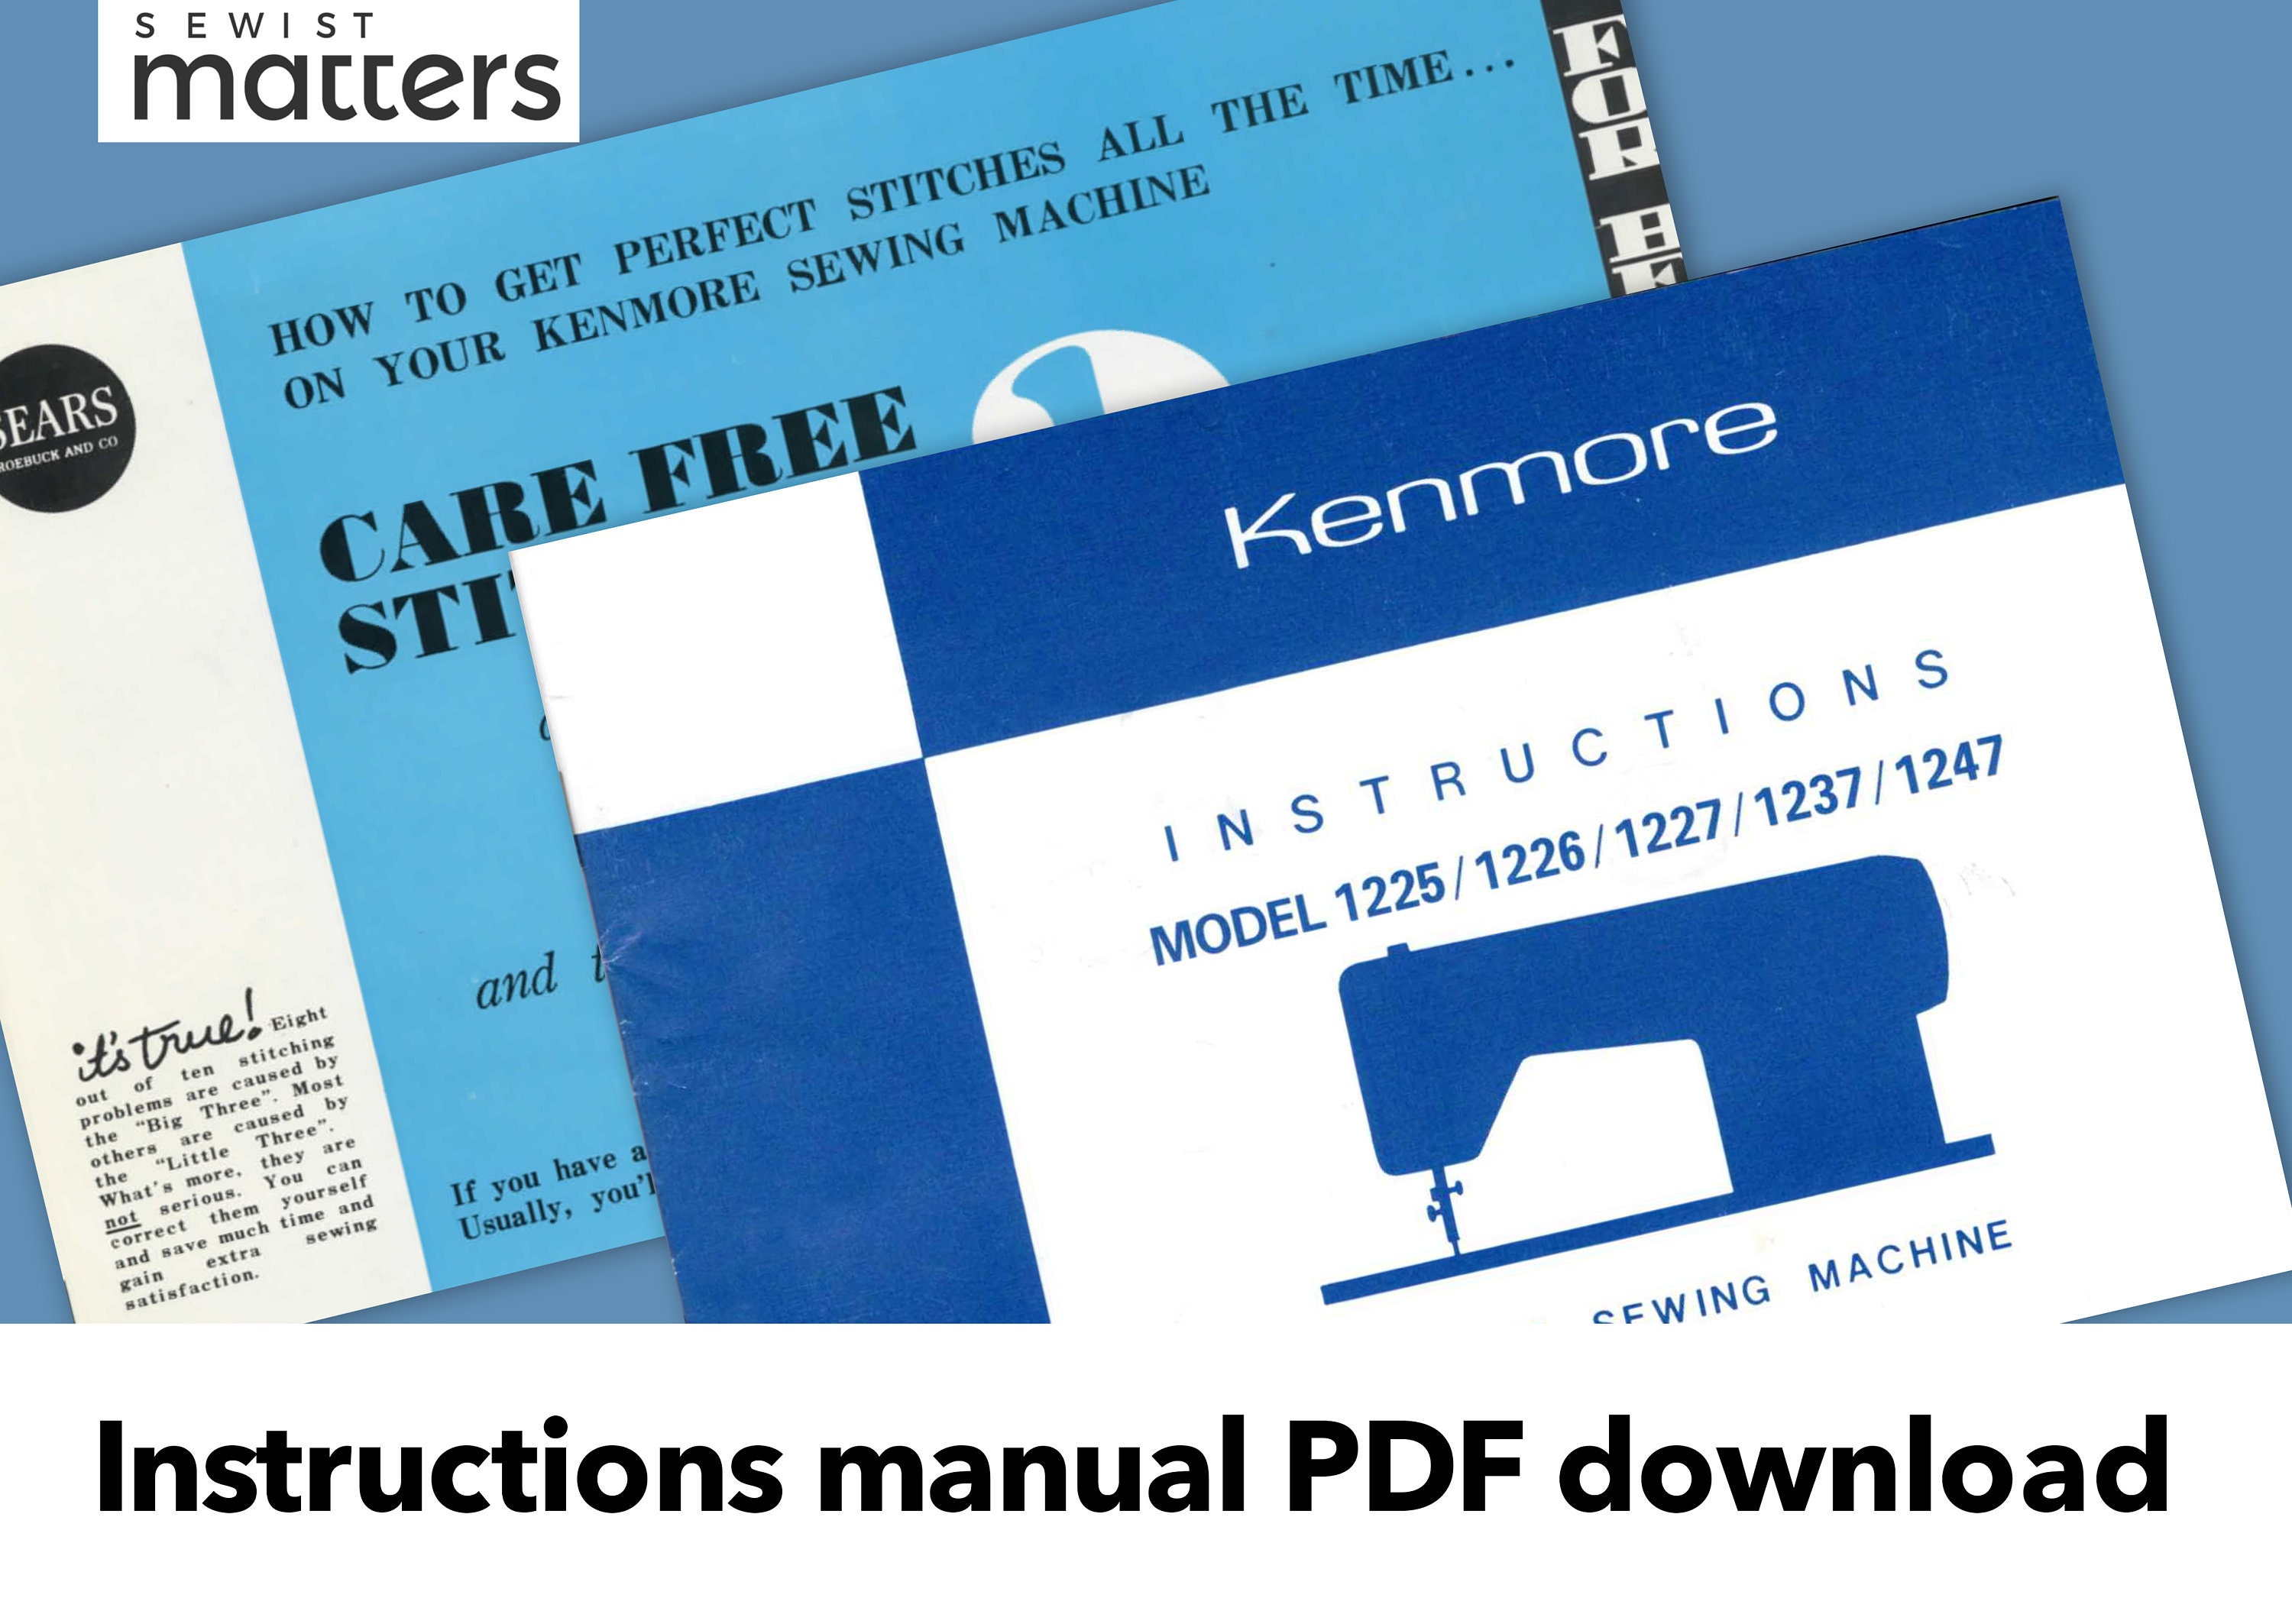 Kenmore 75 158.750 Sewing Machine Instruction Manual PDF Download